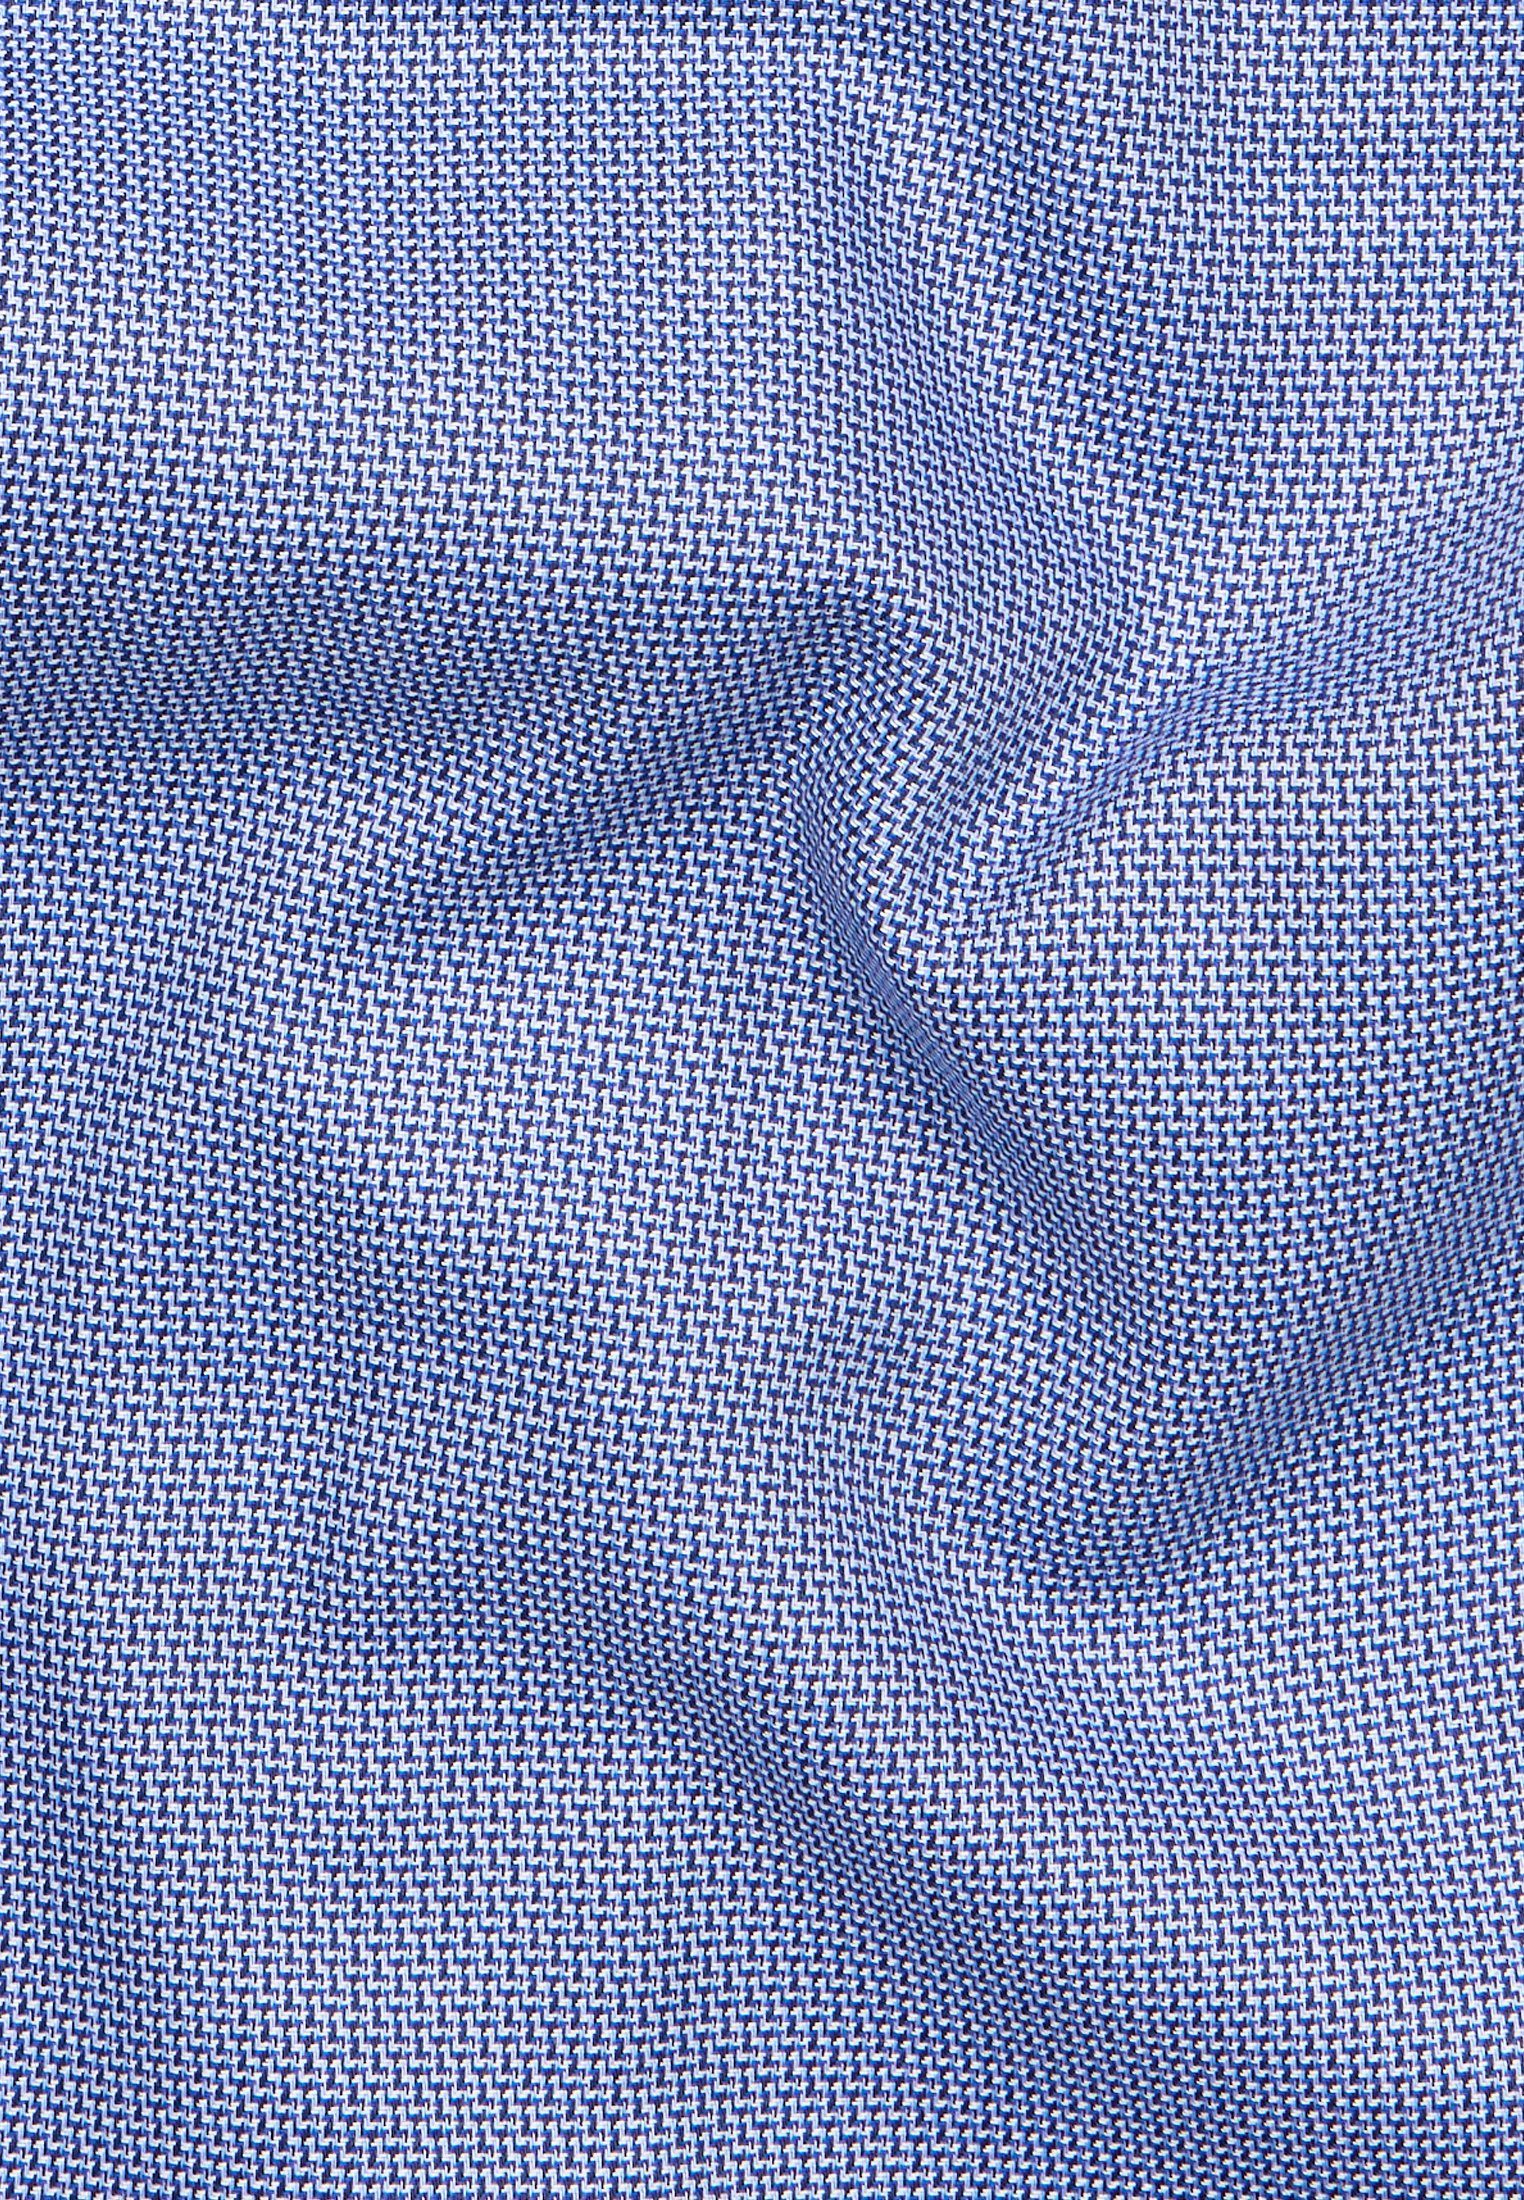 blau FIT Eterna COMFORT Langarmhemd